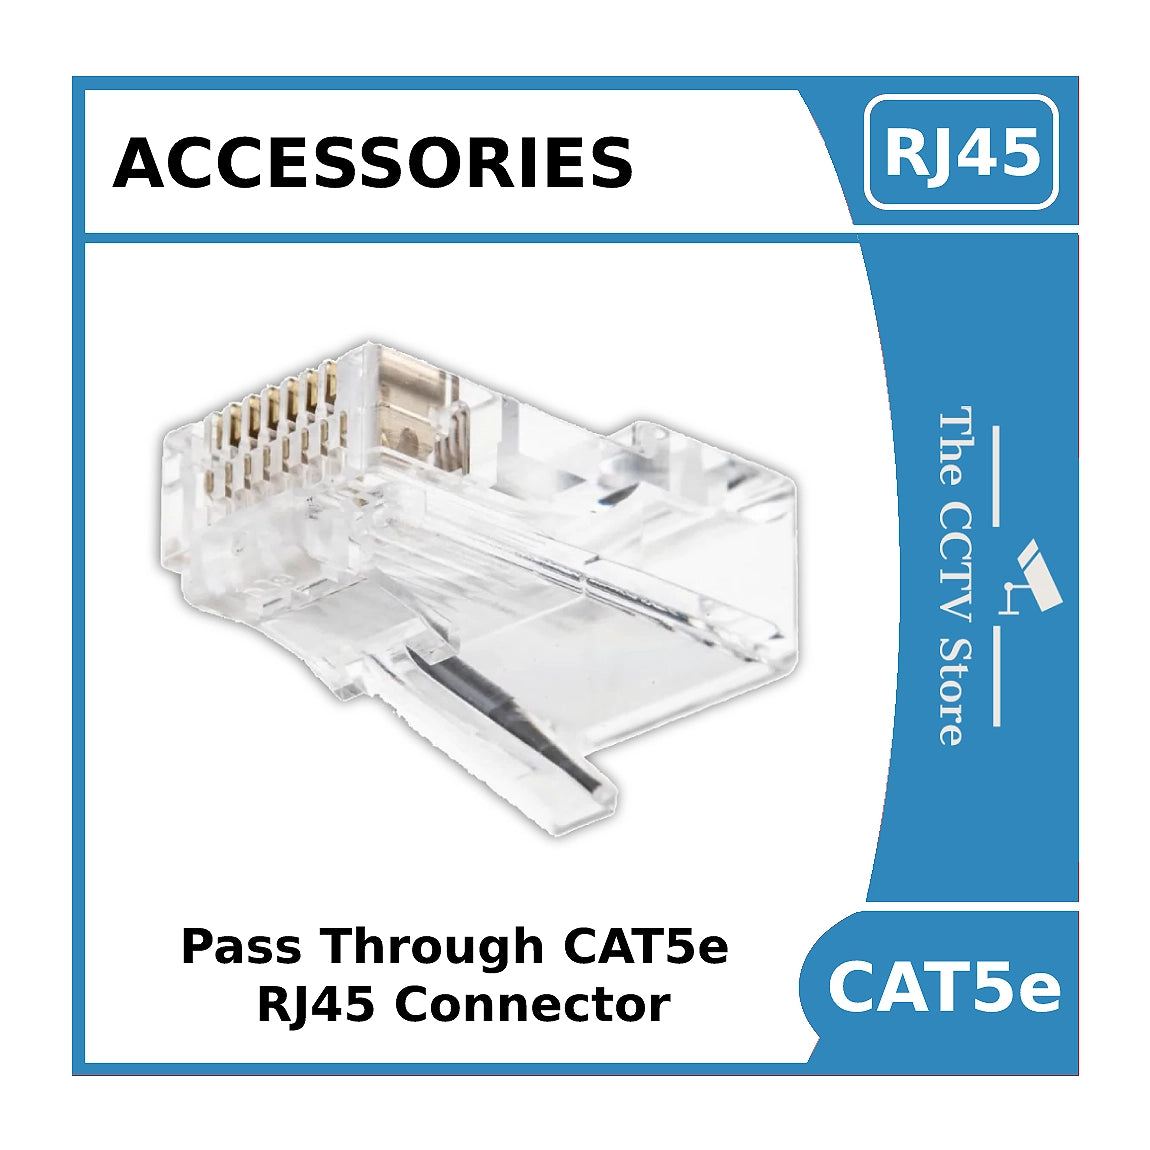 CAT5e Pass Through Plug - RJ45 Pass through Crimp Connector for CAT5e Ethernet Cable